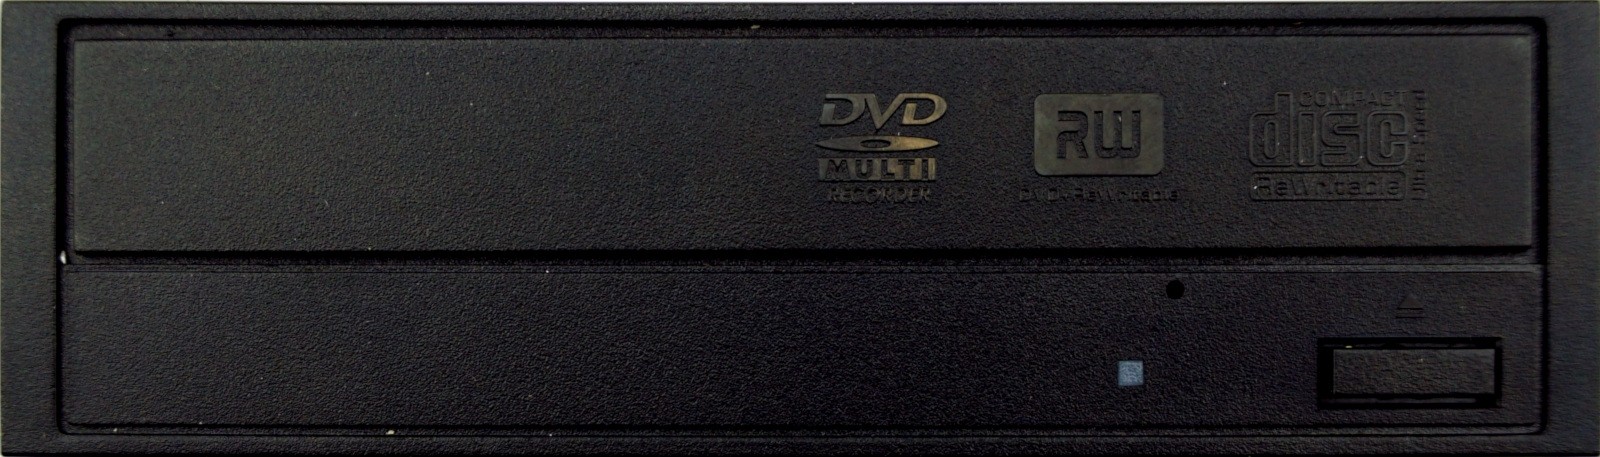 DVD+RW Drive - Full Height (5.25") Black